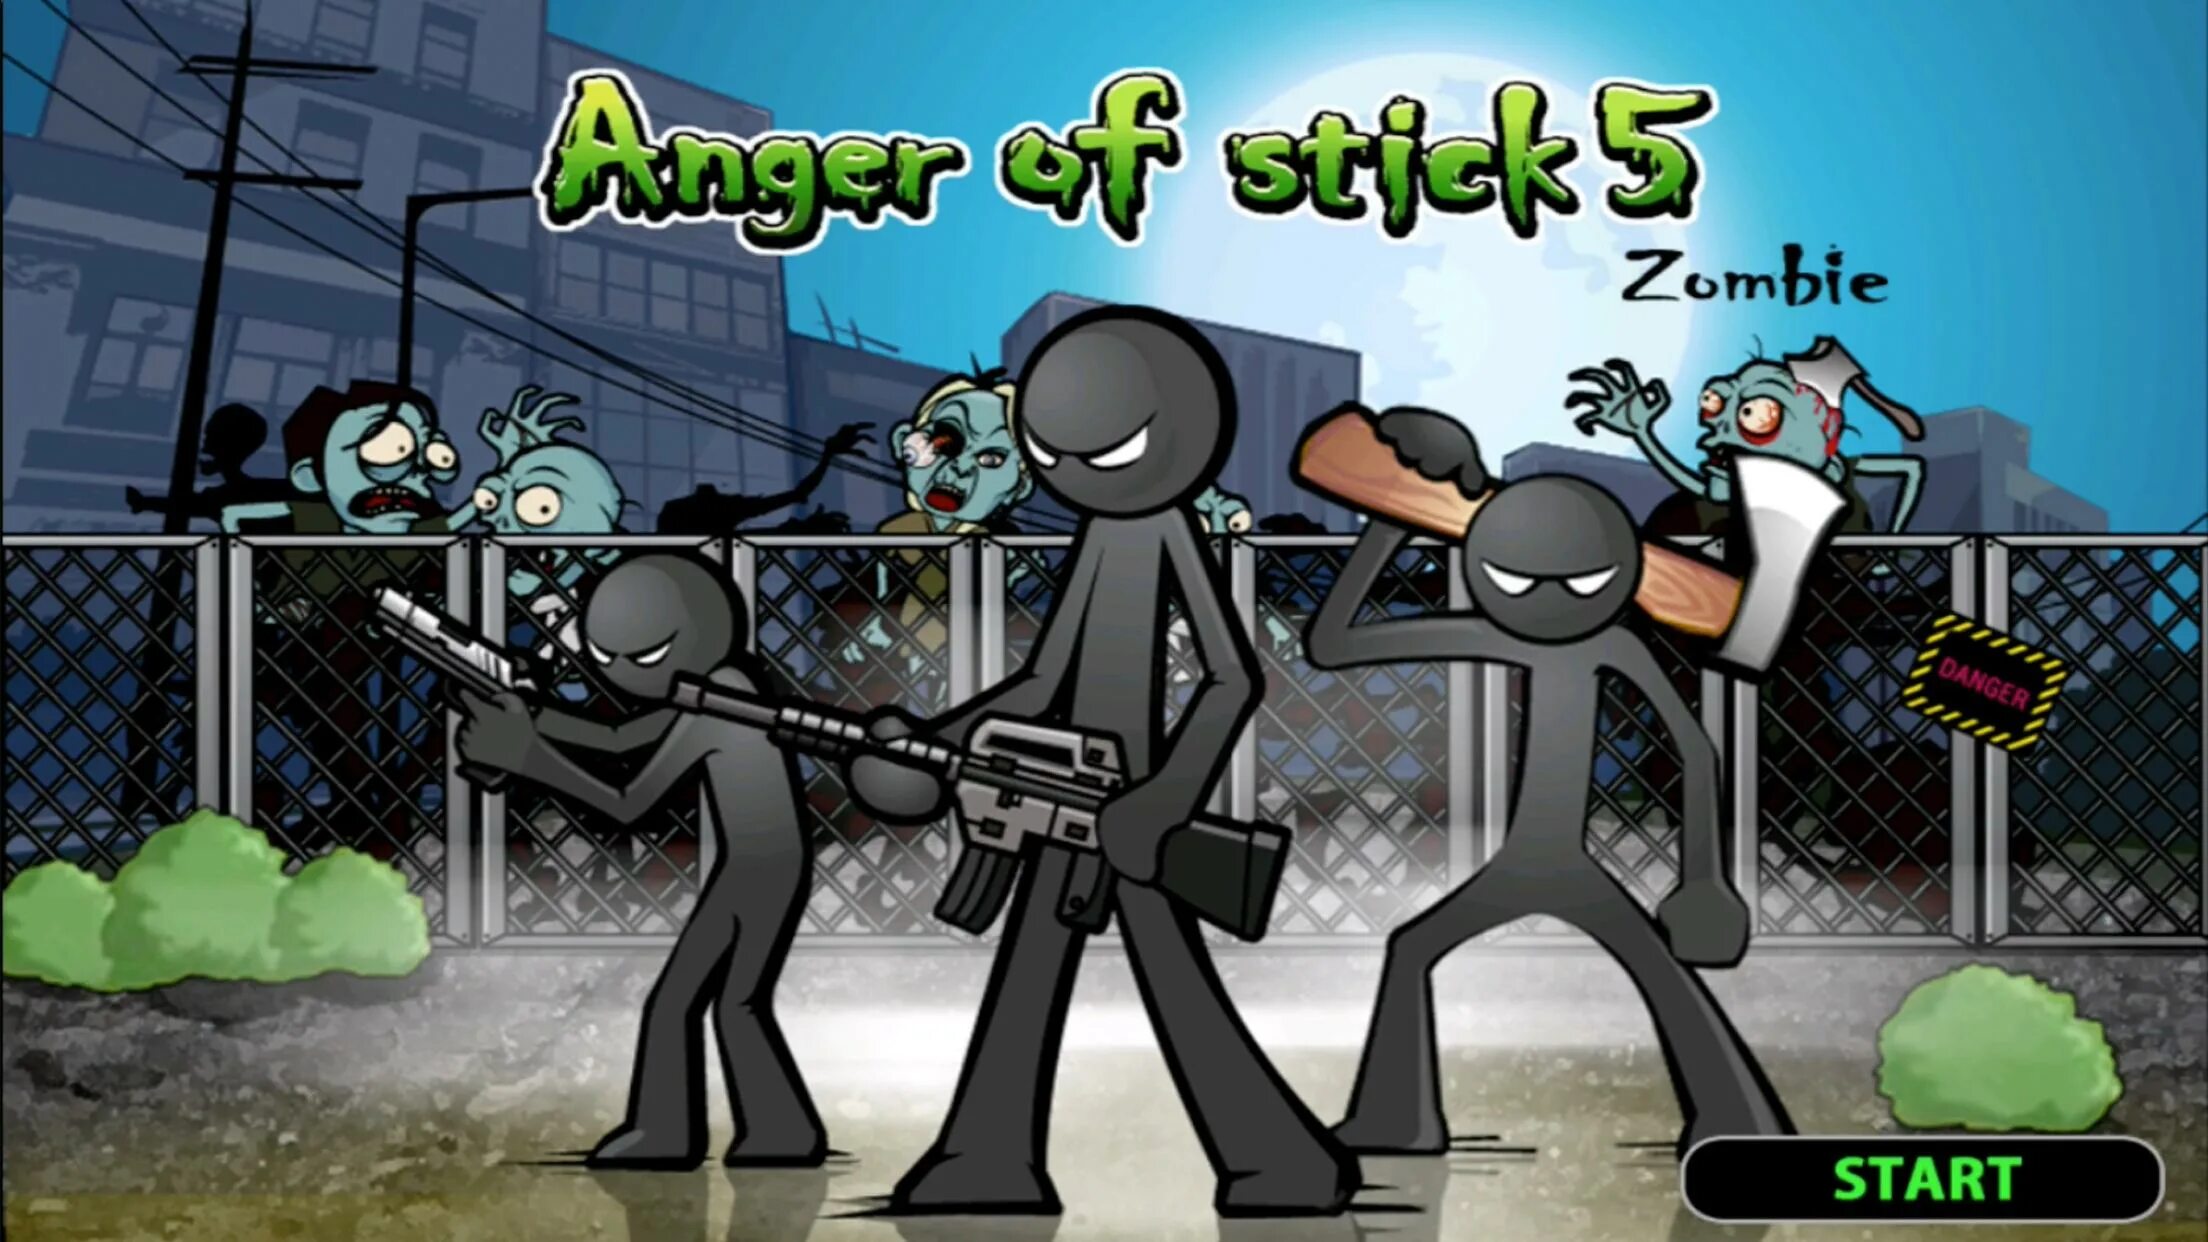 Игра Ангер оф стик 5. Ангер оф стик 5 зомби. Игра Anger of Stick 5 Zombie. Черные человечки игра. Черные человечки против